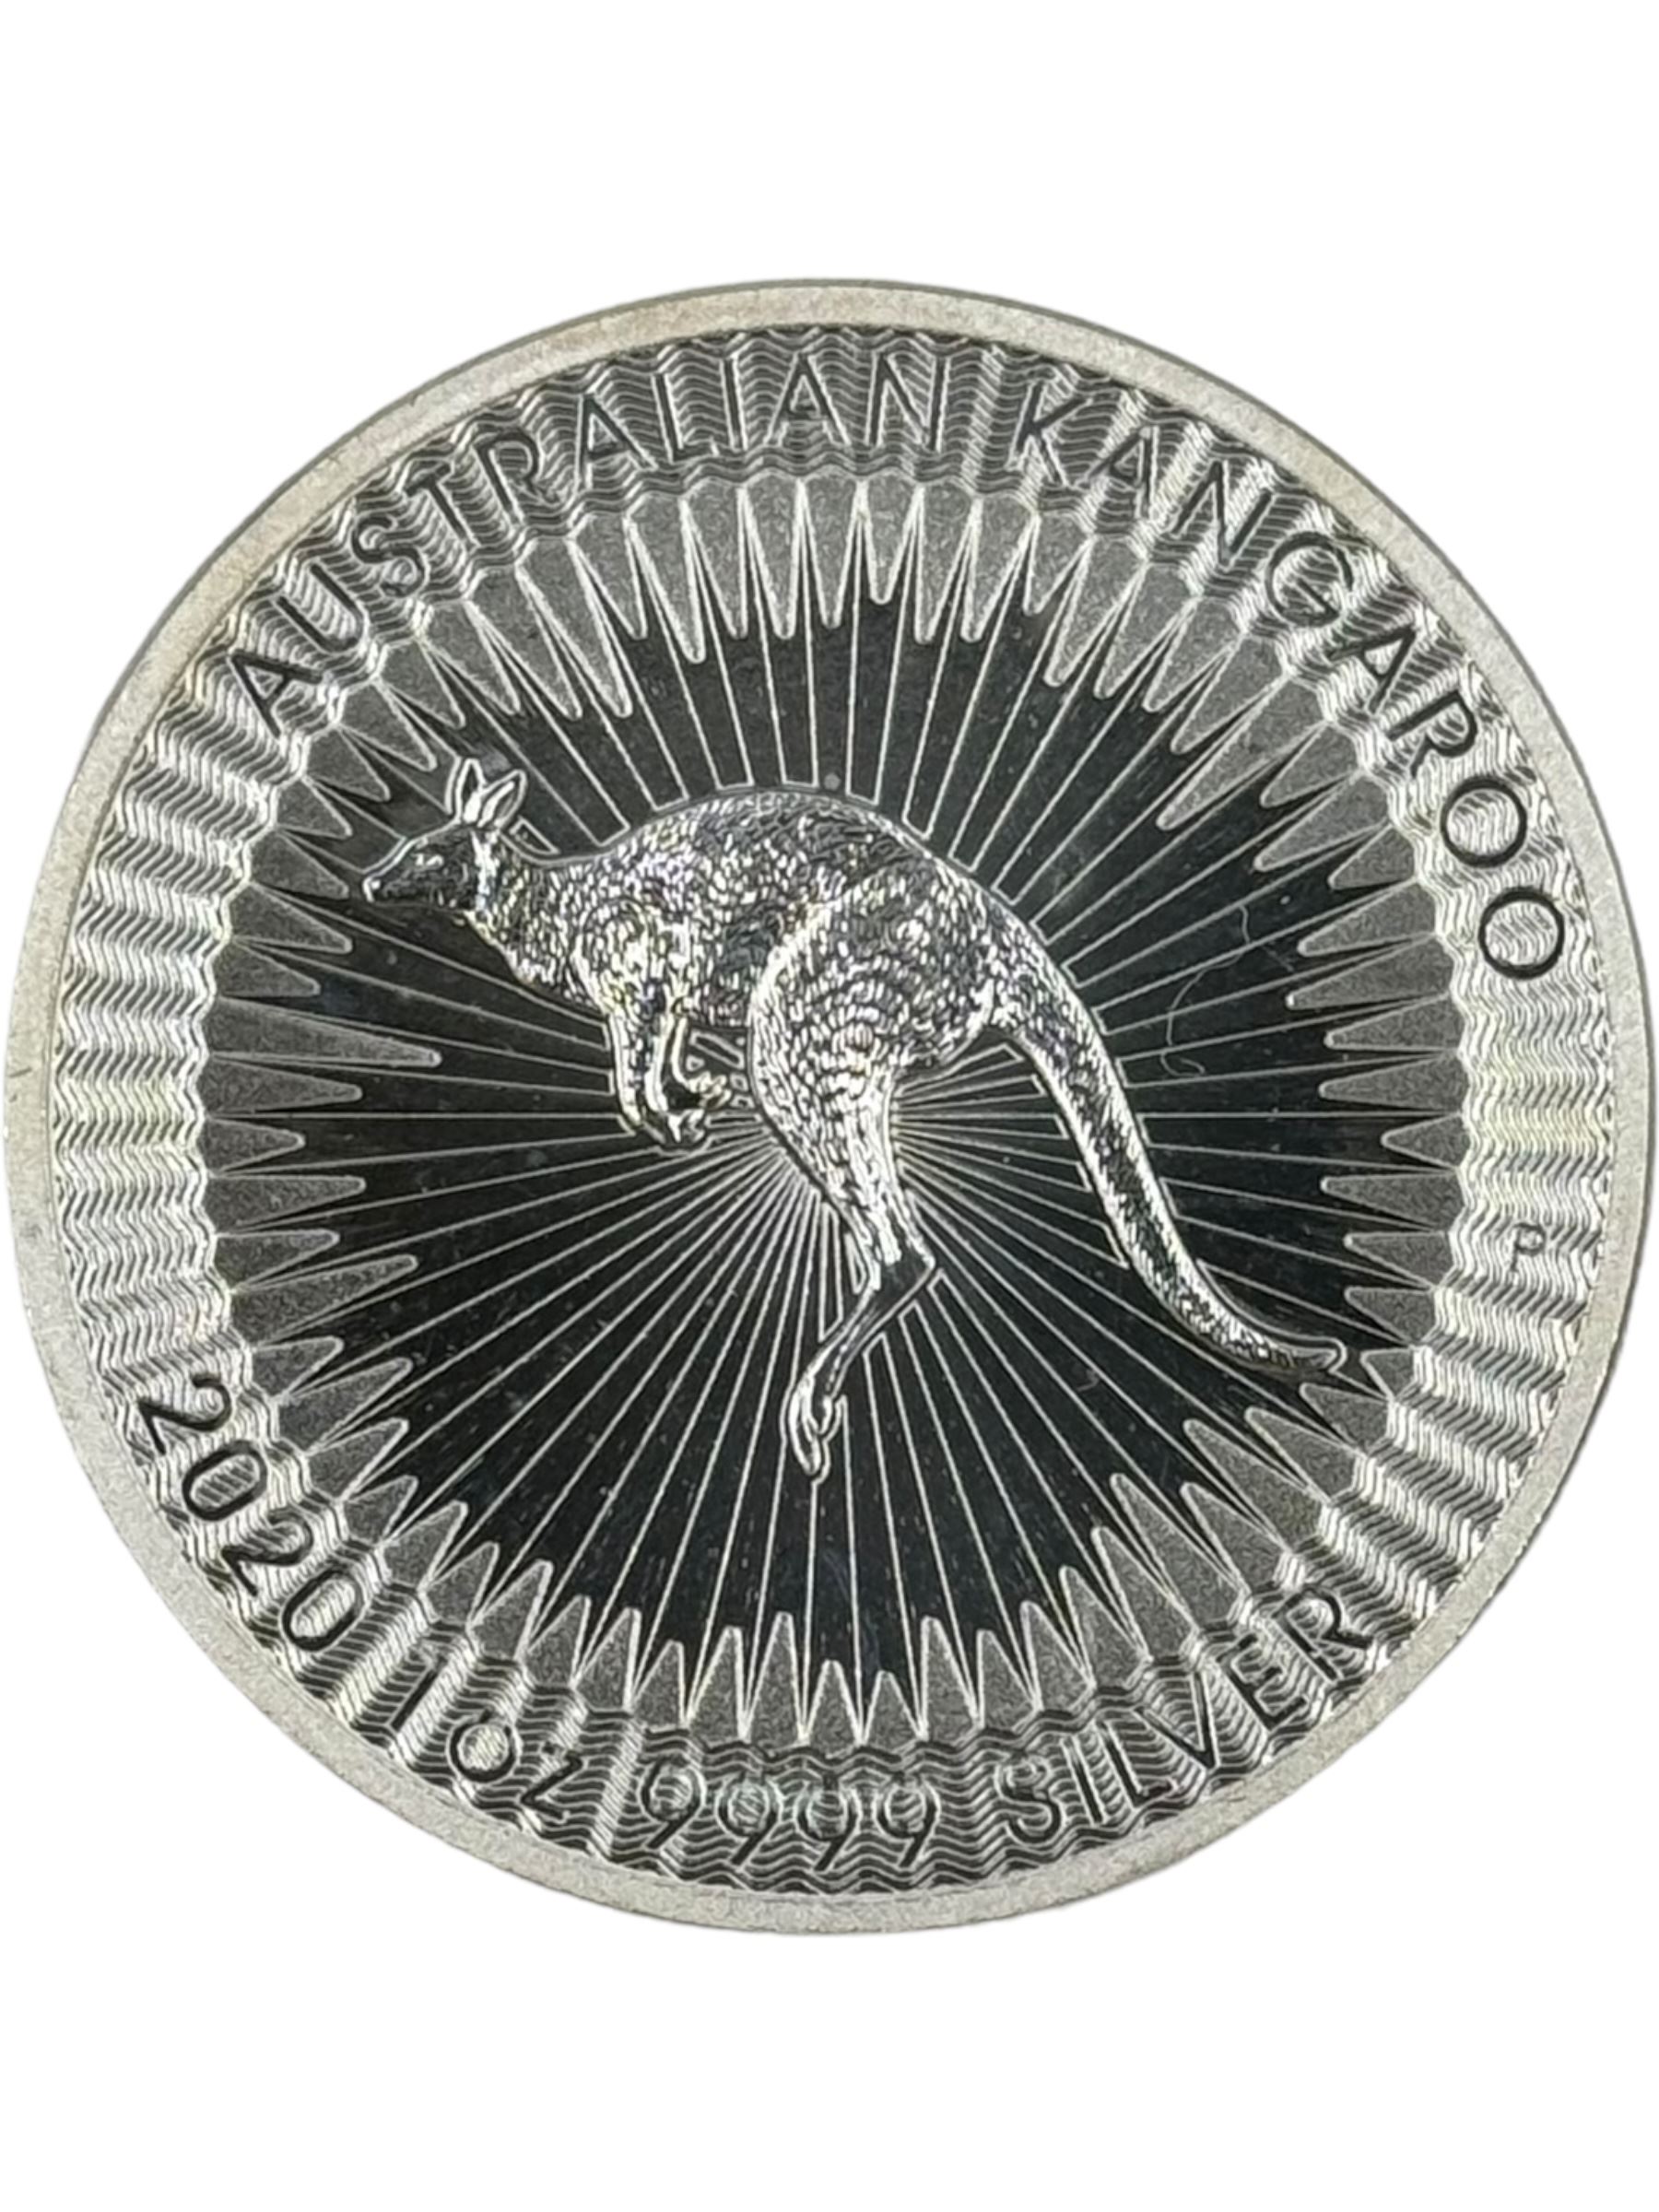 Nine Queen Elizabeth II Australia one ounce fine silver one dollar coins - Image 8 of 8